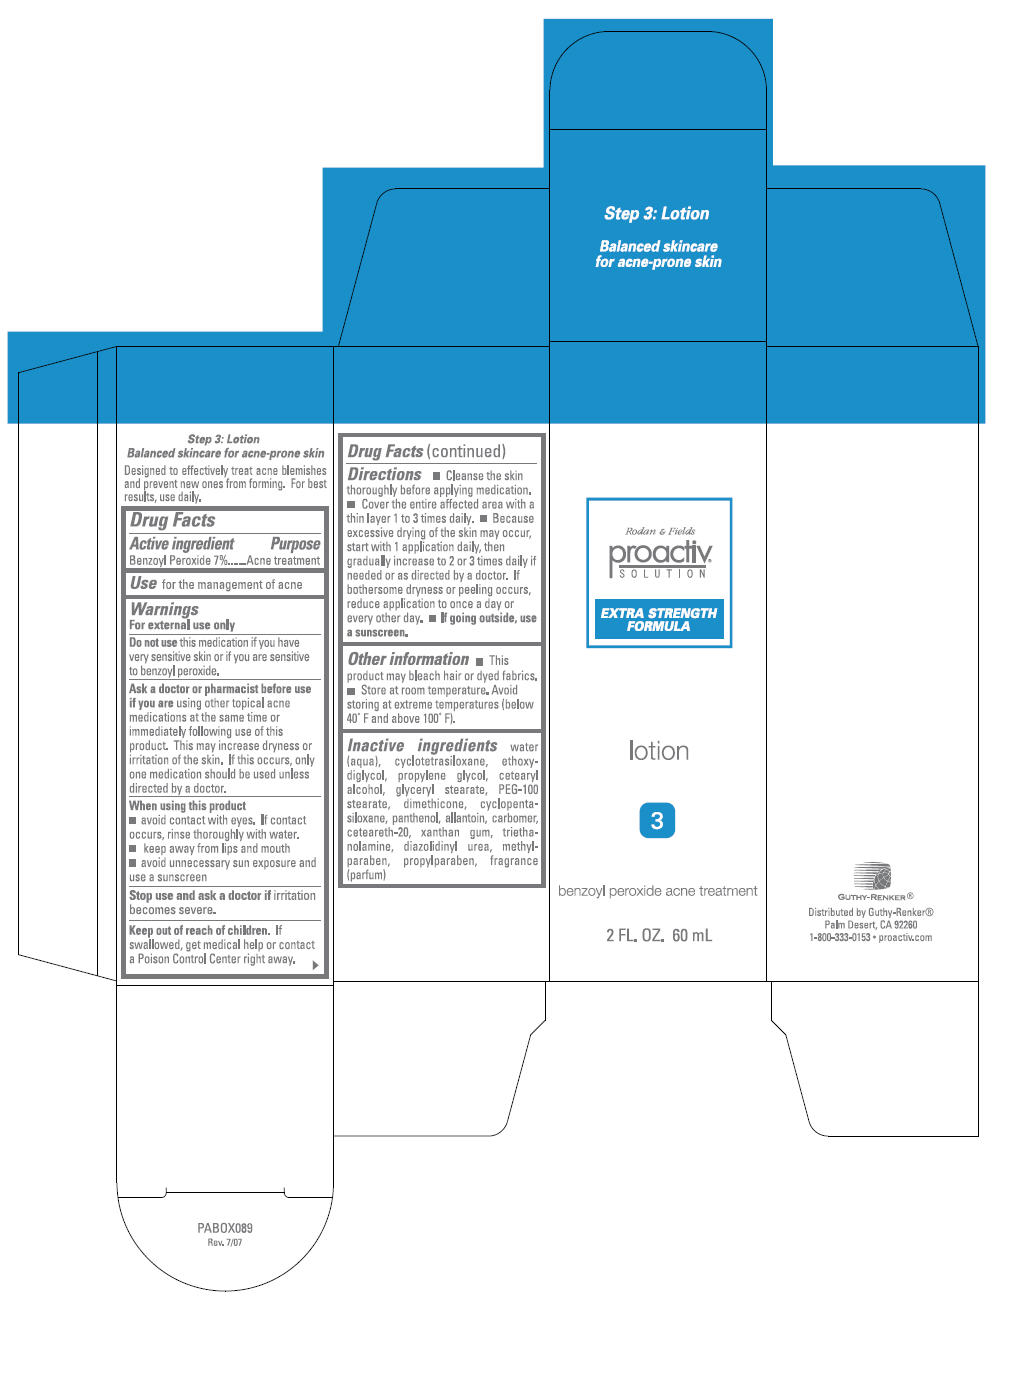 PRINCIPAL DISPLAY PANEL - 2 FL. OZ. 60 mL Bottle Carton